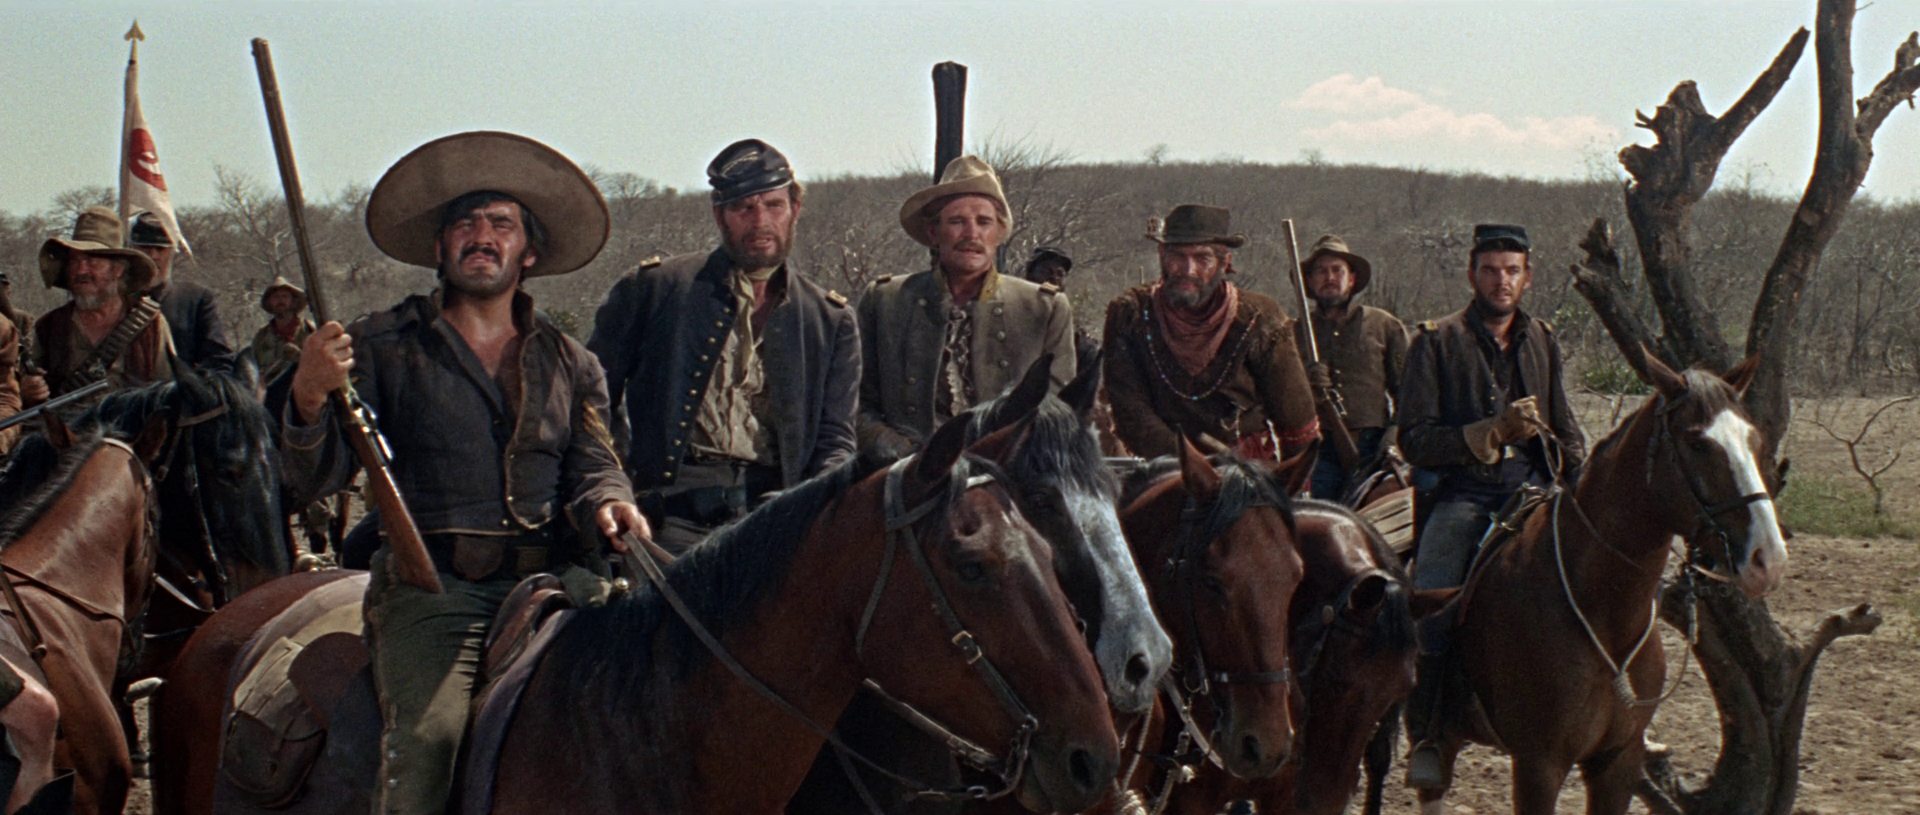 Mario Adorf, Charlton Heston, Richard Harris, James Coburn and others as cavalrymen on horseback in trist-dry surroundings.